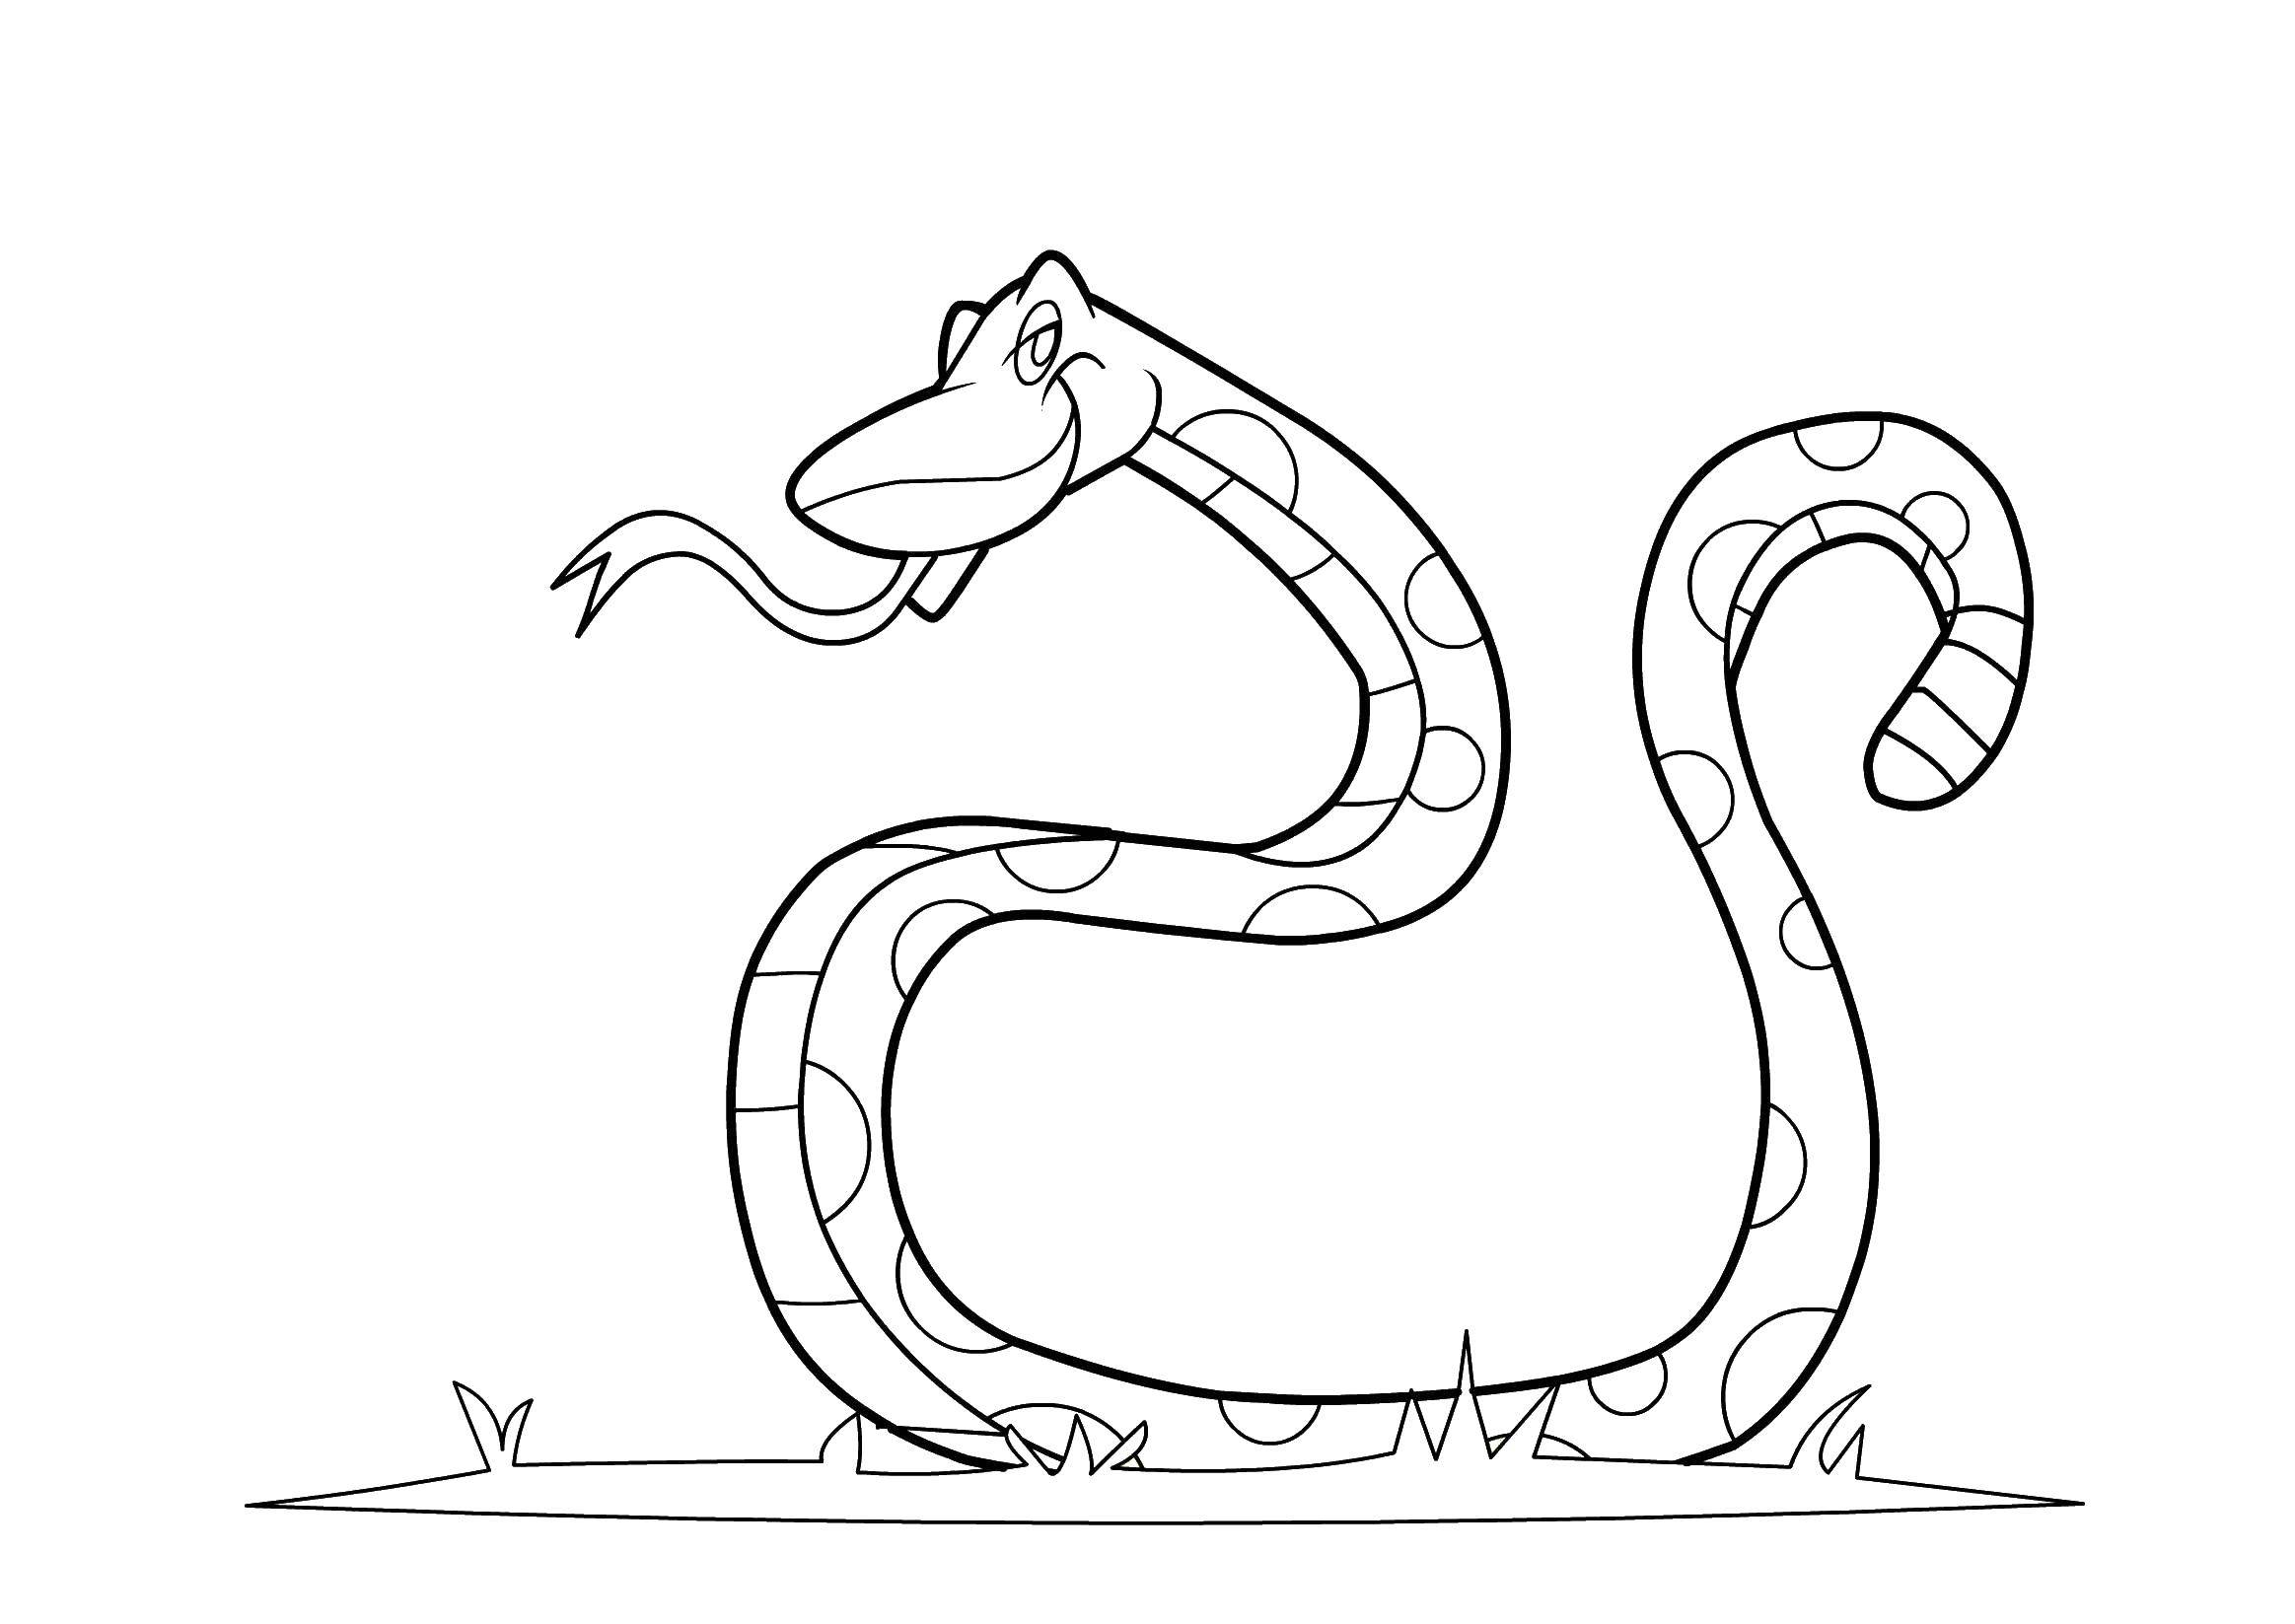 Coloring Treacherous snake. Category The snake. Tags:  Reptile, snake.